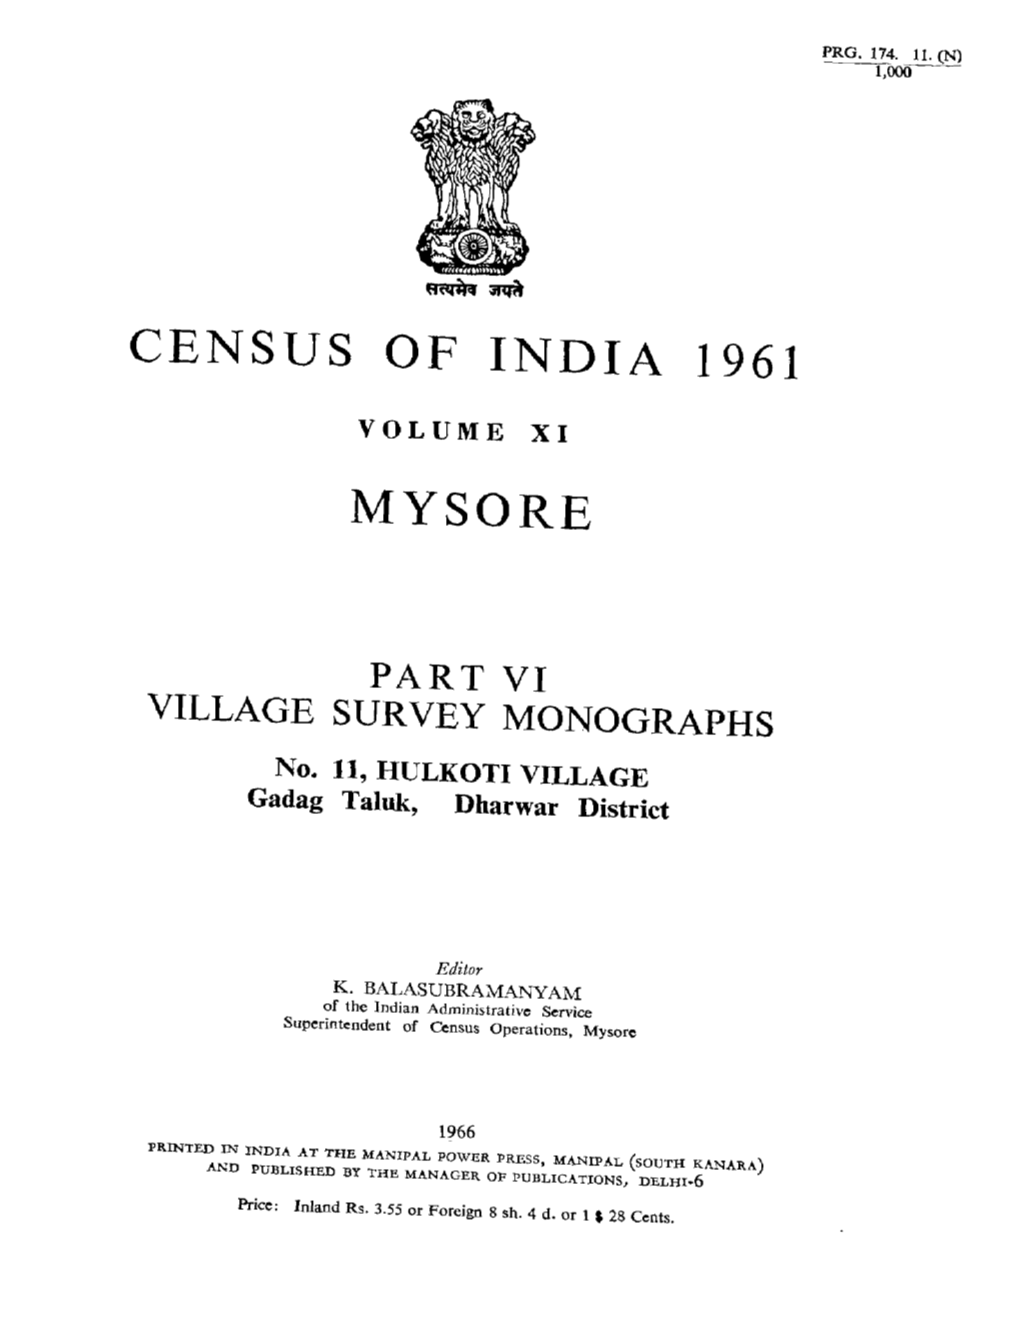 Village Survey Monographs, No-11 Hulkoti, Part VI, Vol-XI